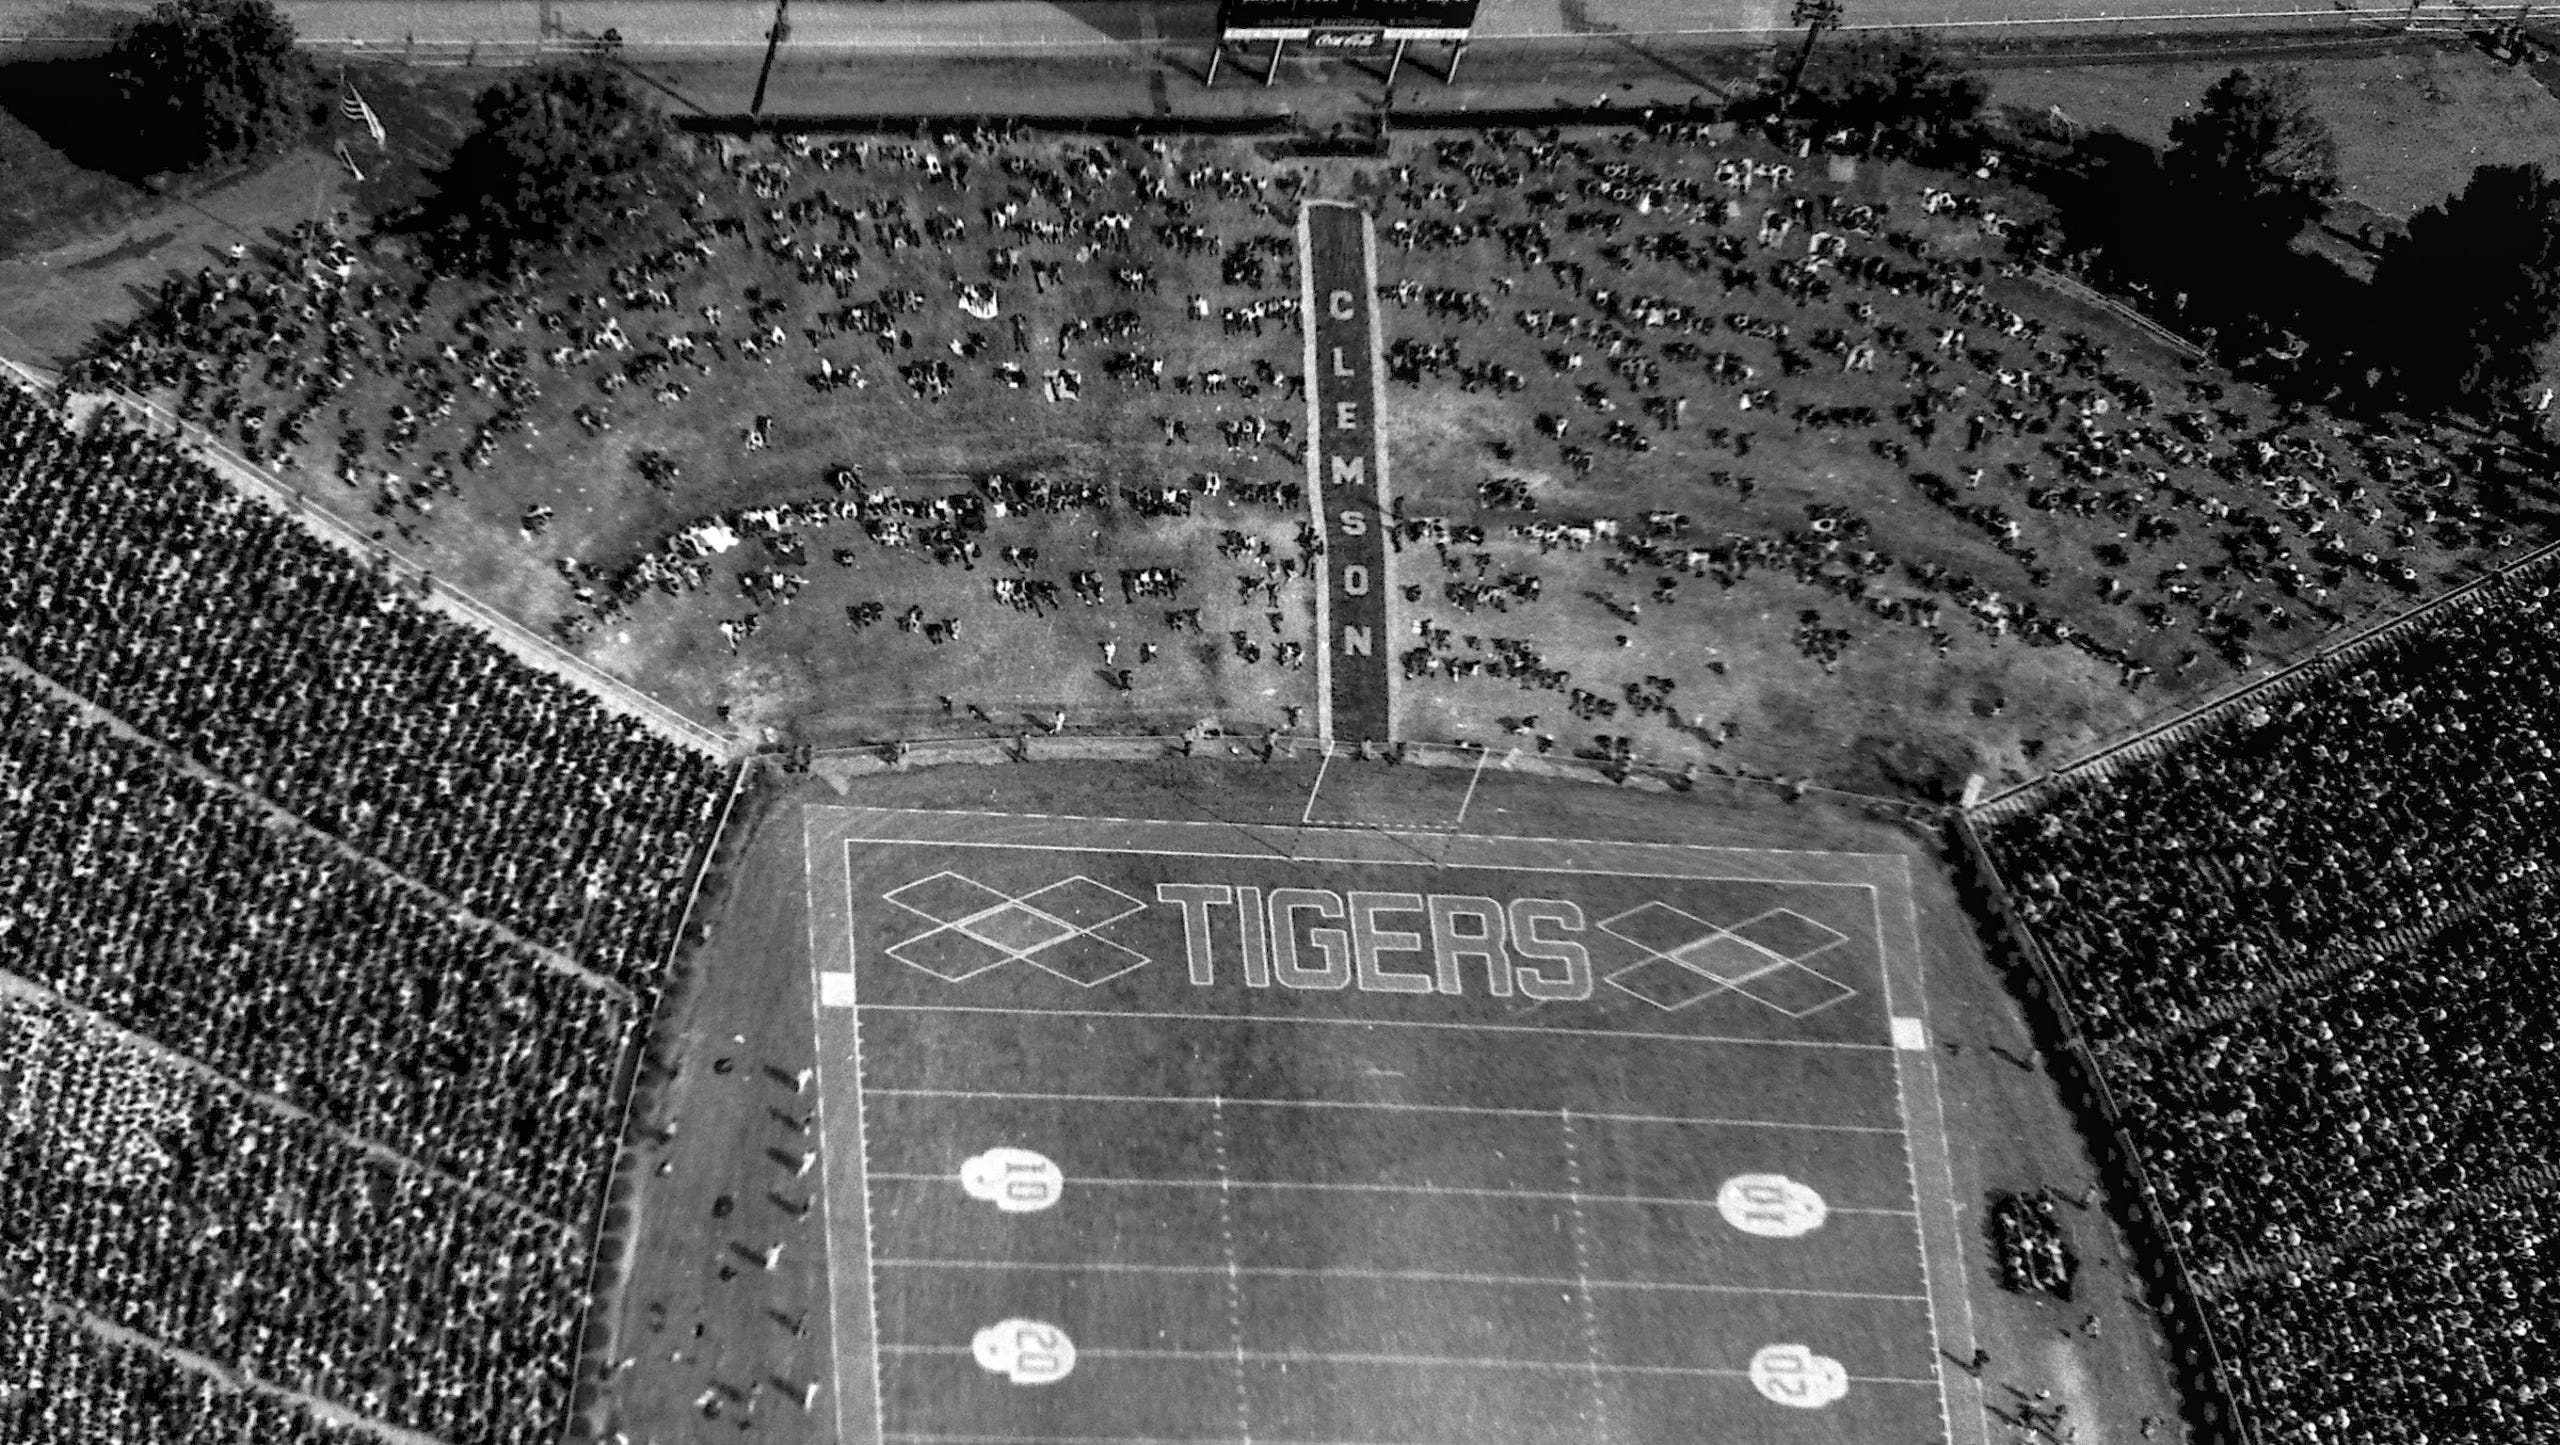 Clemsons Memorial Stadium Through The Years